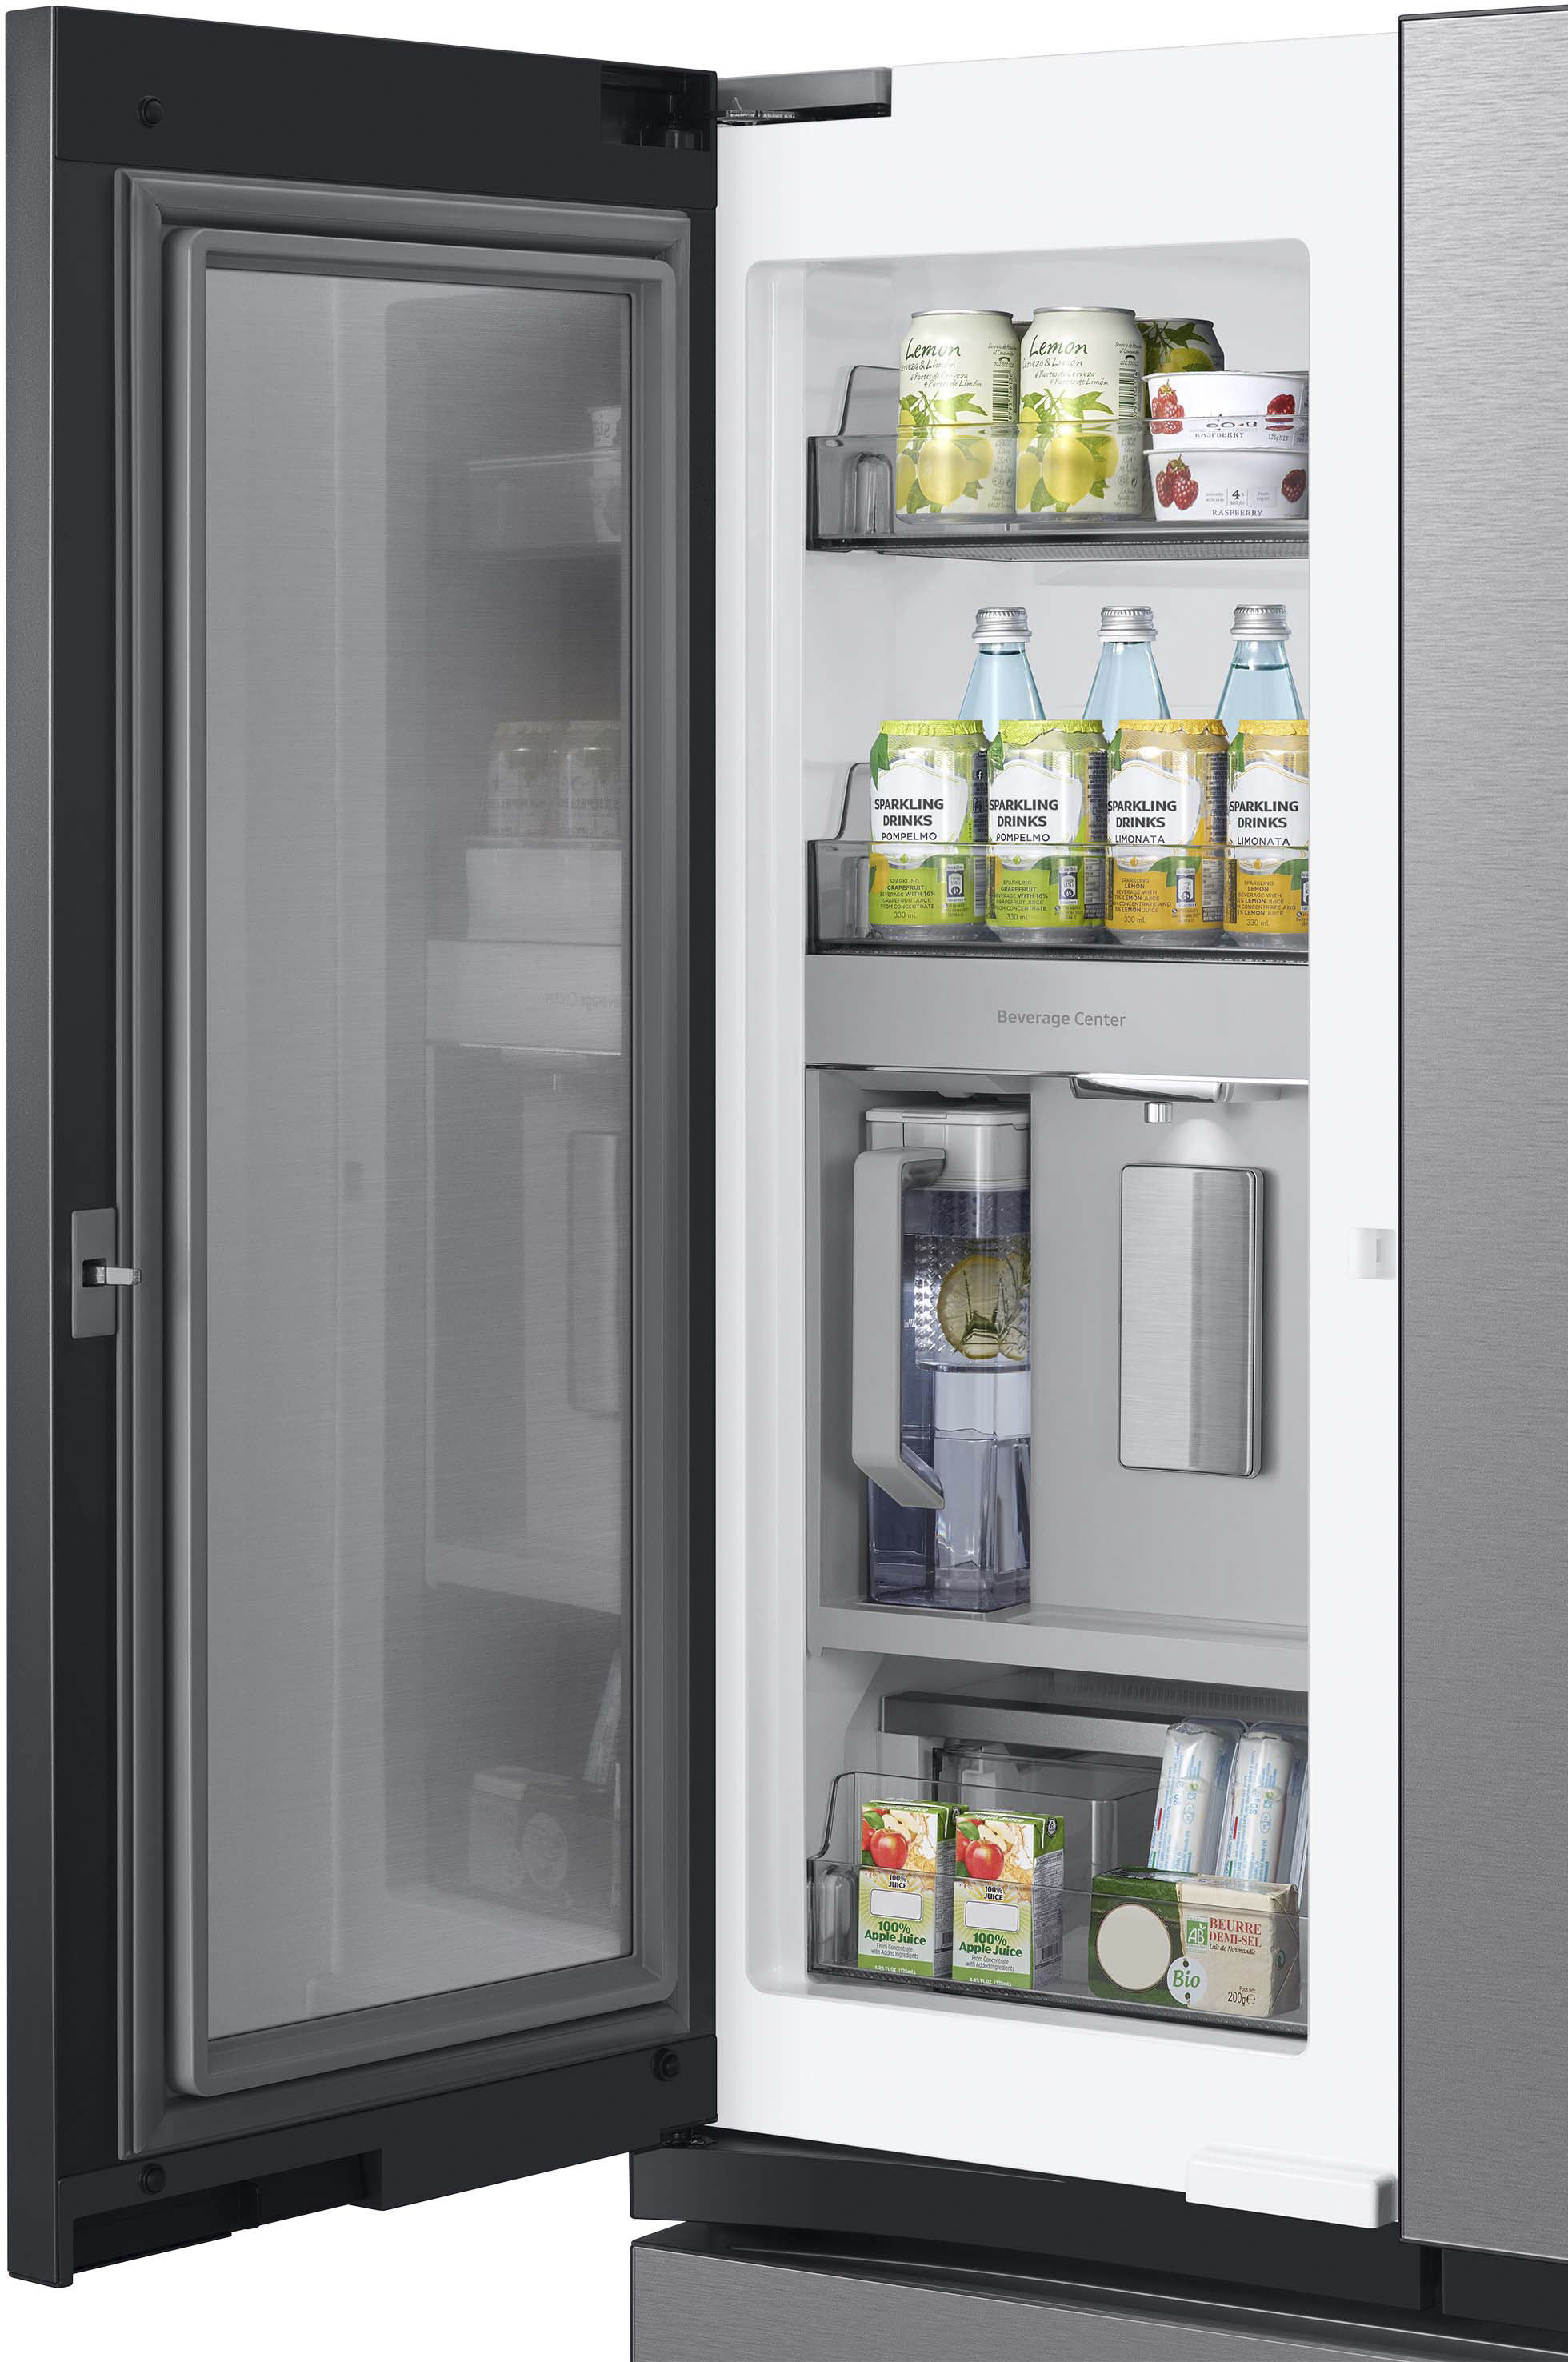 Samsung Refrigerators - Sam's Club